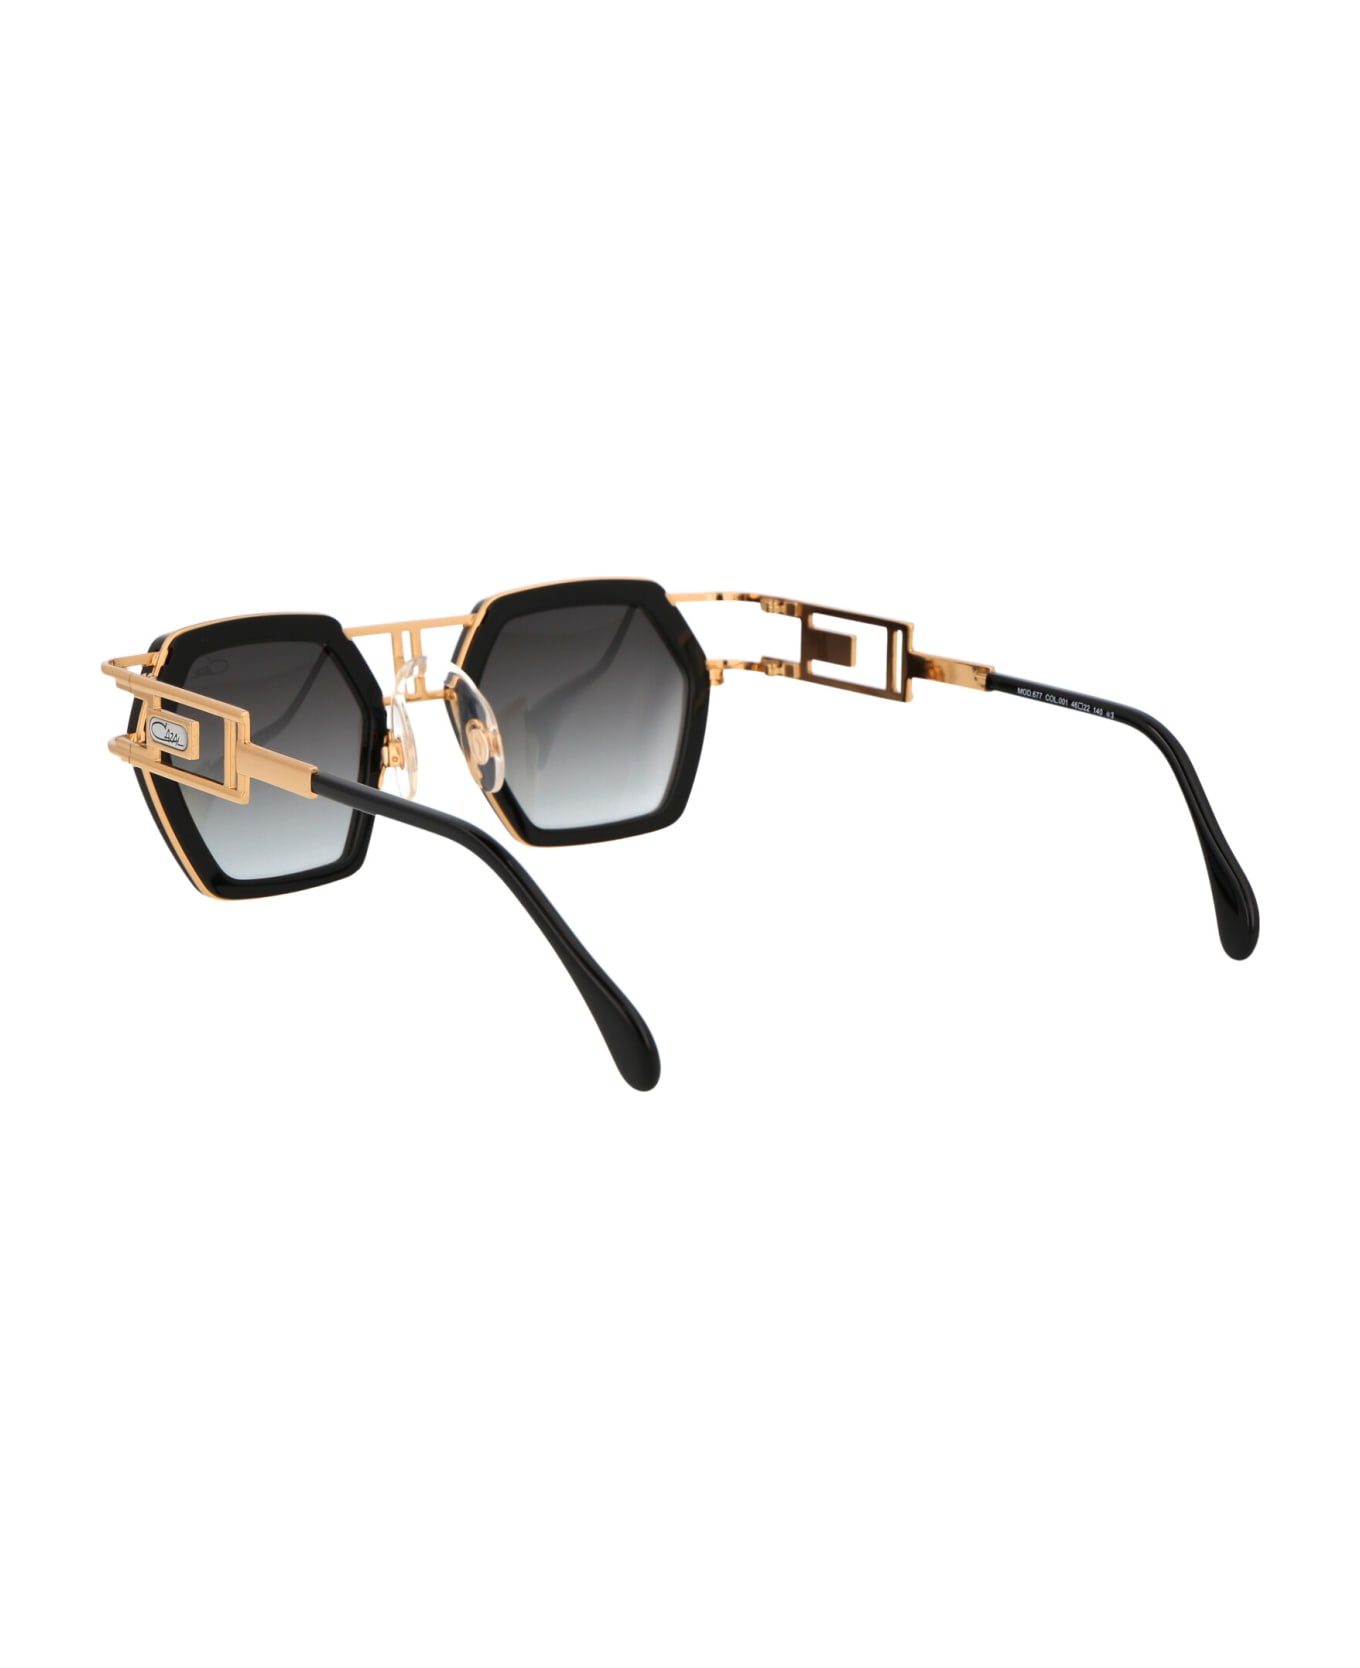 Cazal Mod. 677 Sunglasses - 001 BLACK